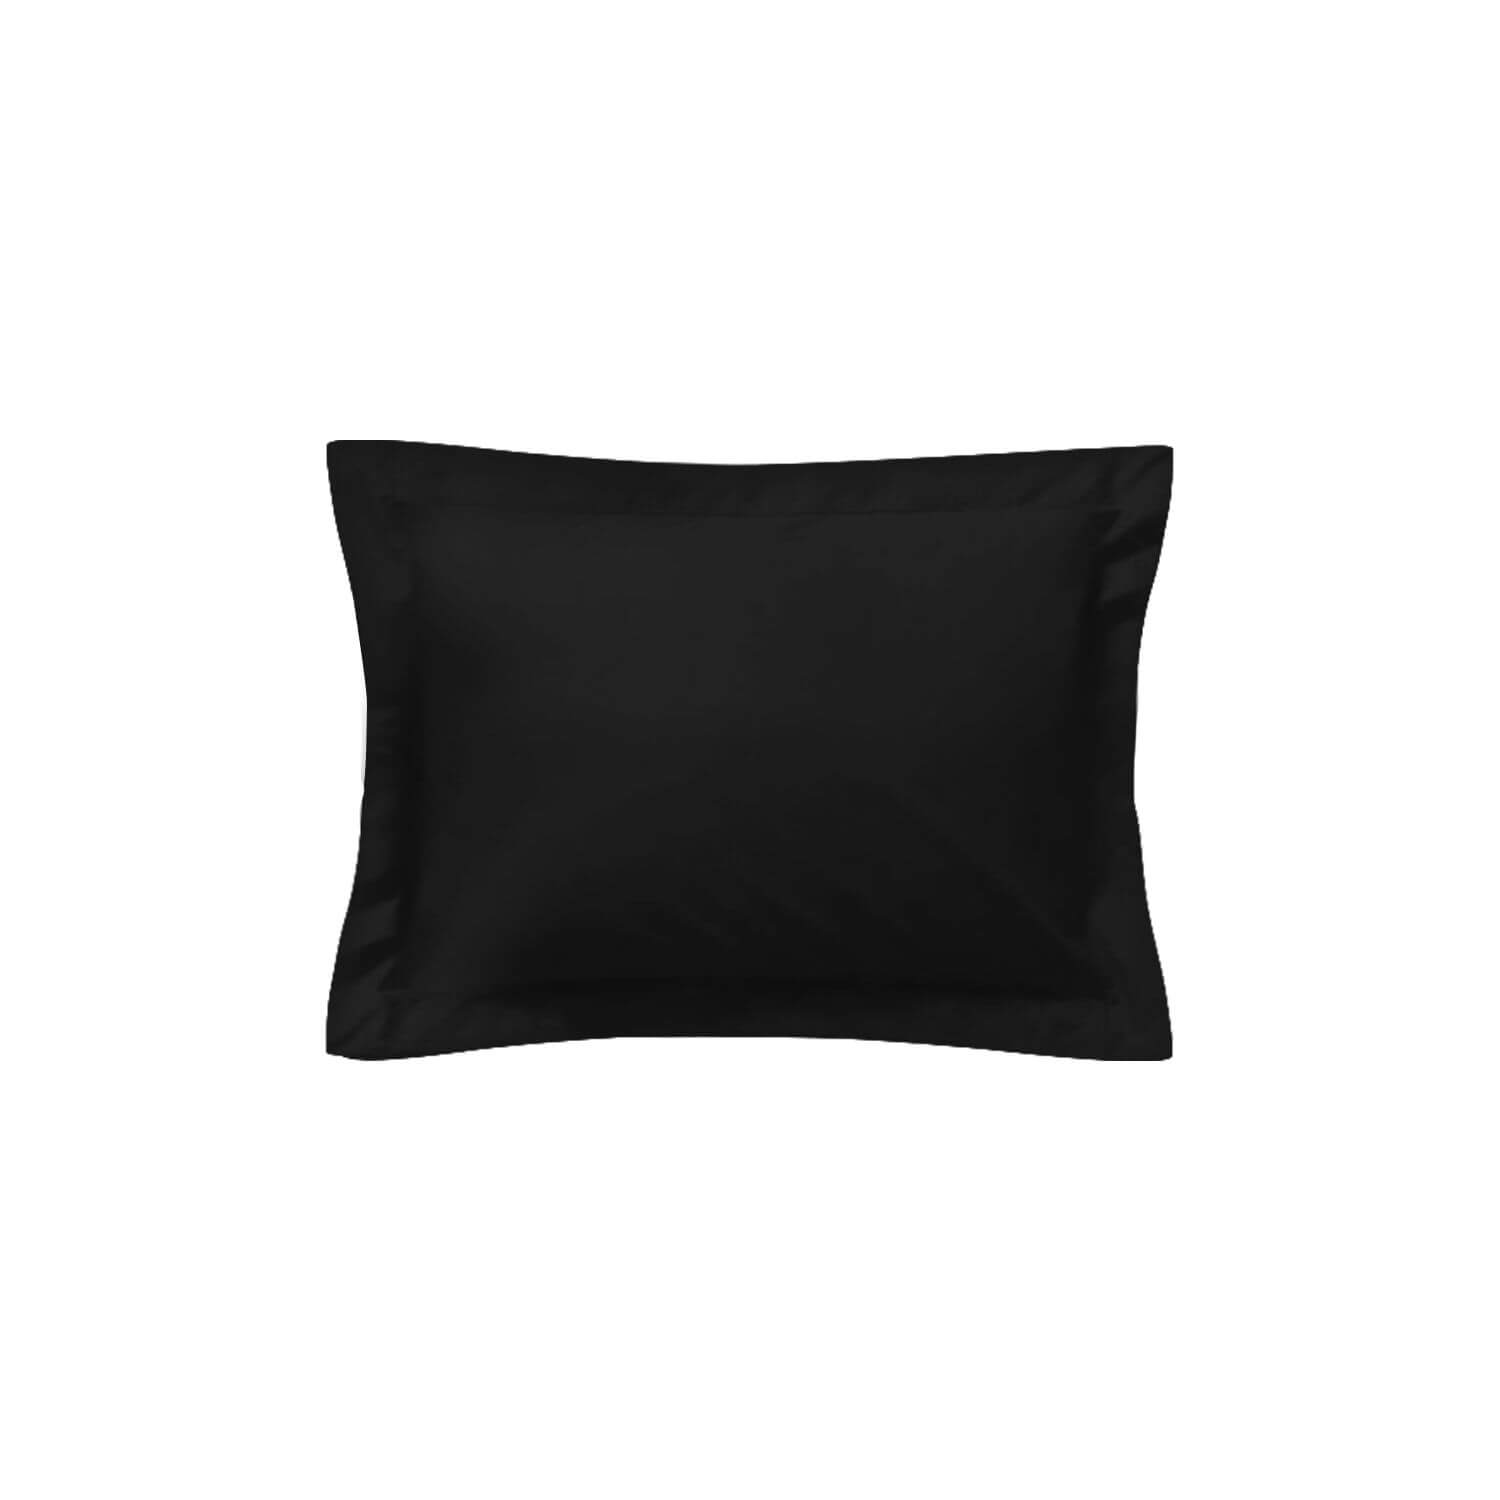 Taie américaine d'oreiller rectangle - 50 x 75 cm - 100% coton - France